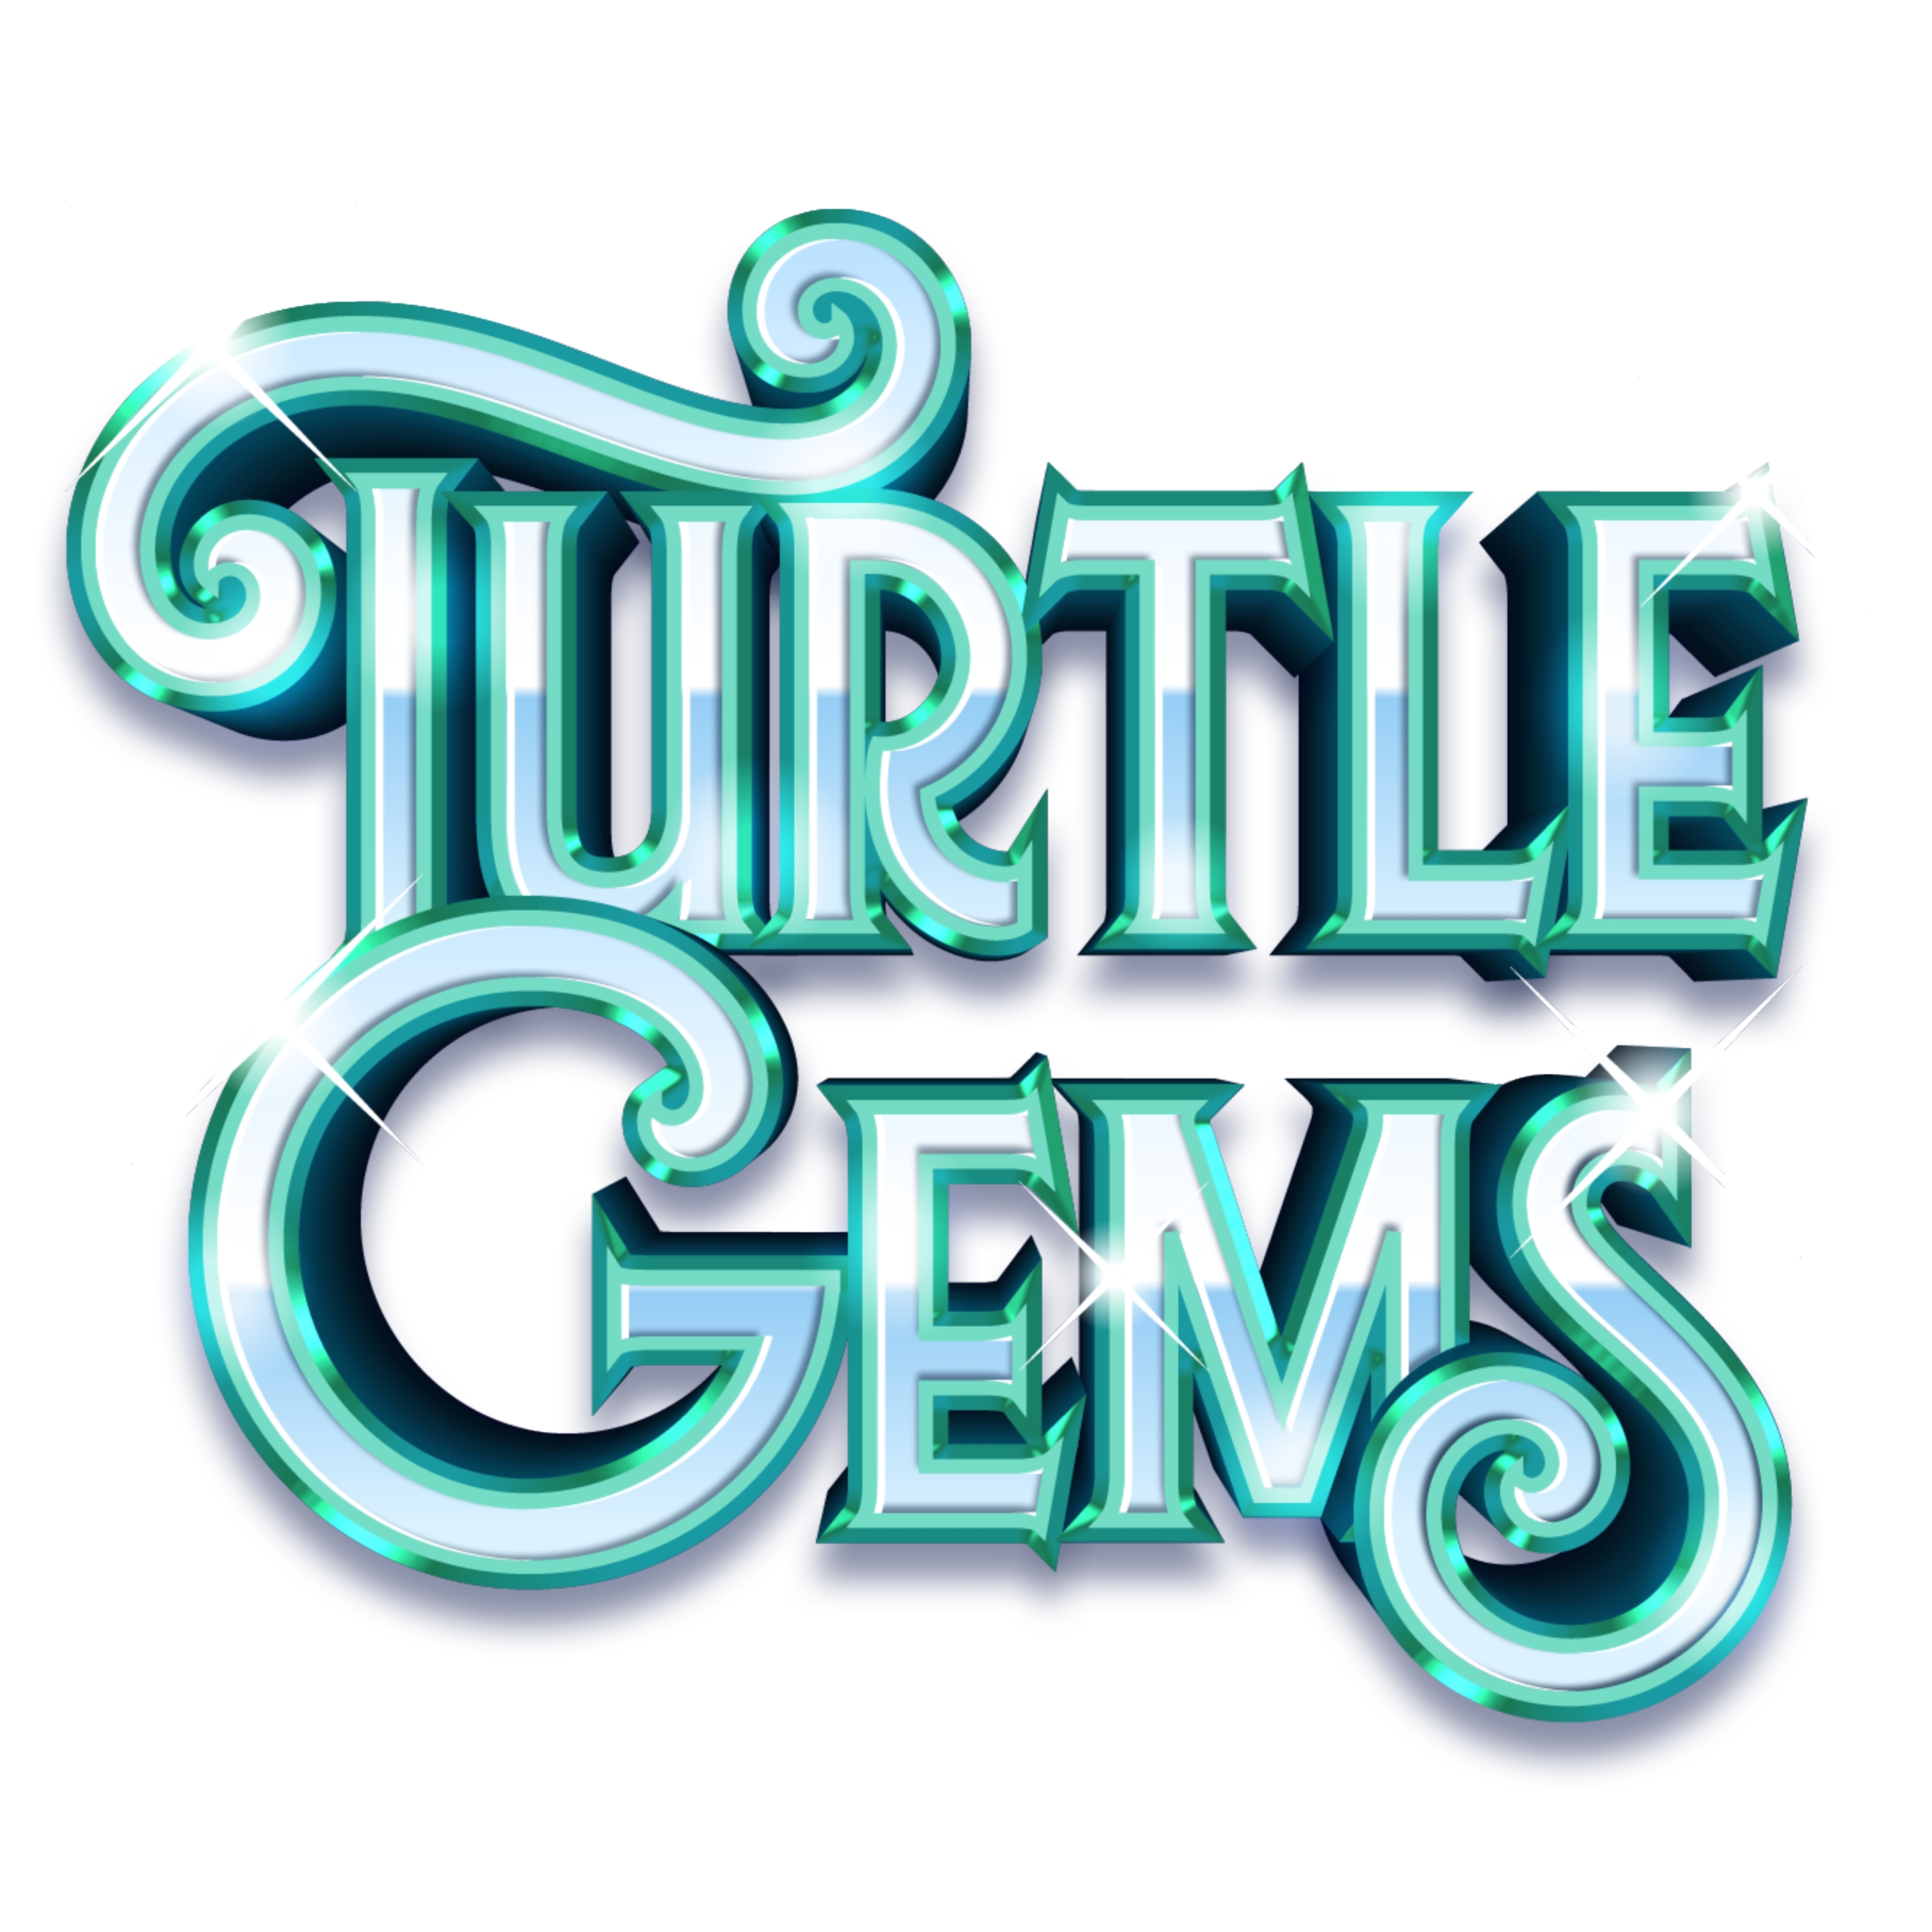 Turtle Gems demo